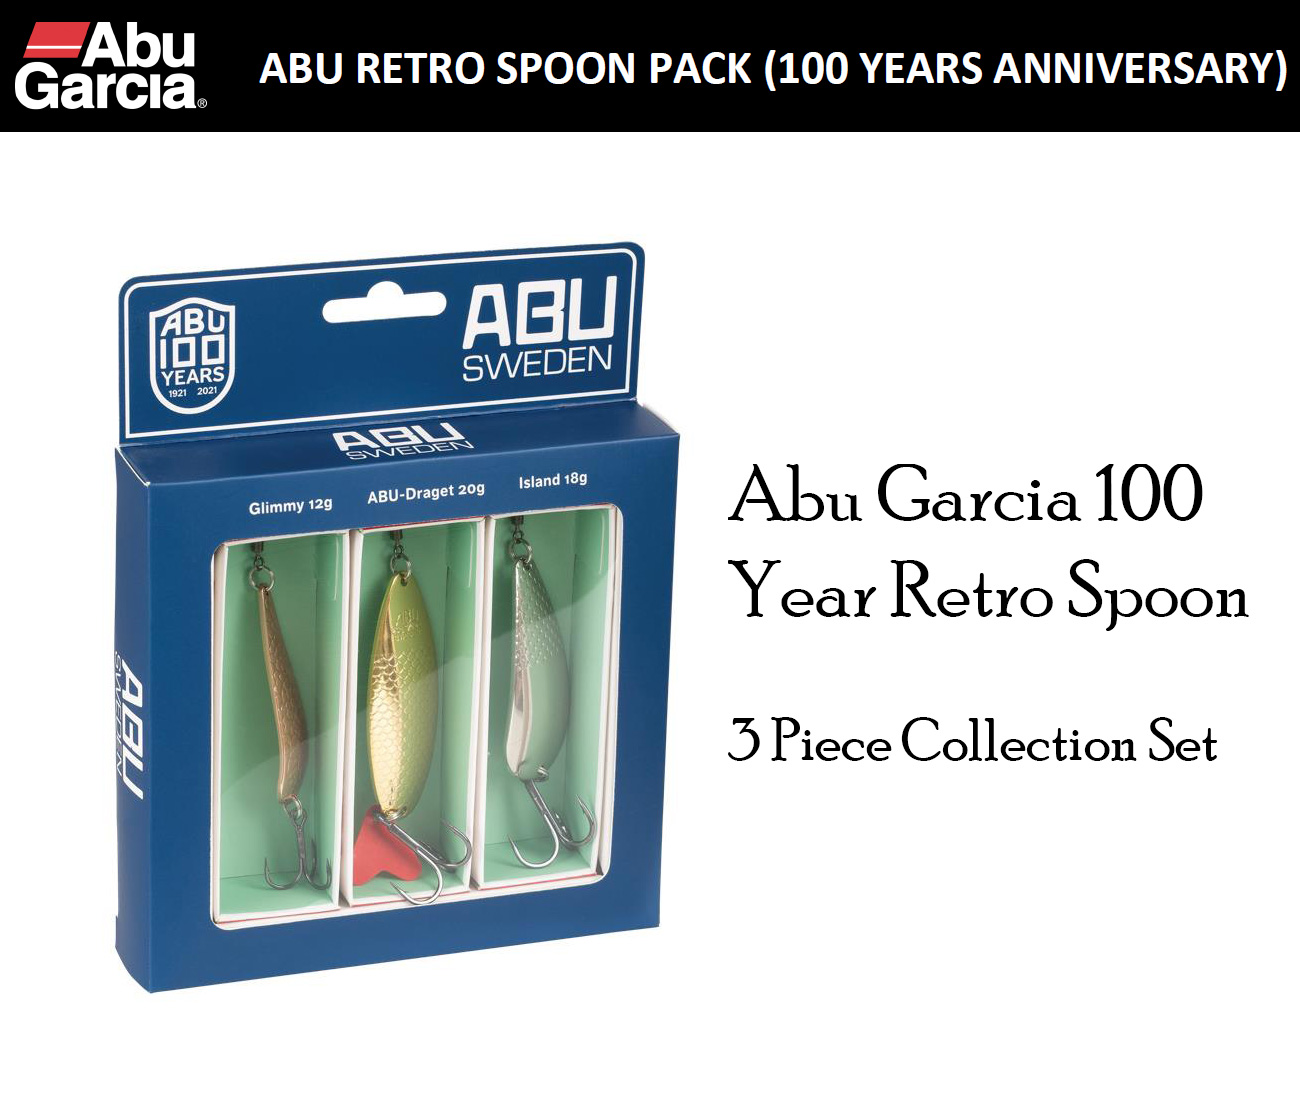 Abu Garcia 100 Years Anniversary Retro Spoon Collection, Abu Garcia spoons, abu garcia fishing spoons, fishing spoons, abu garcia collection